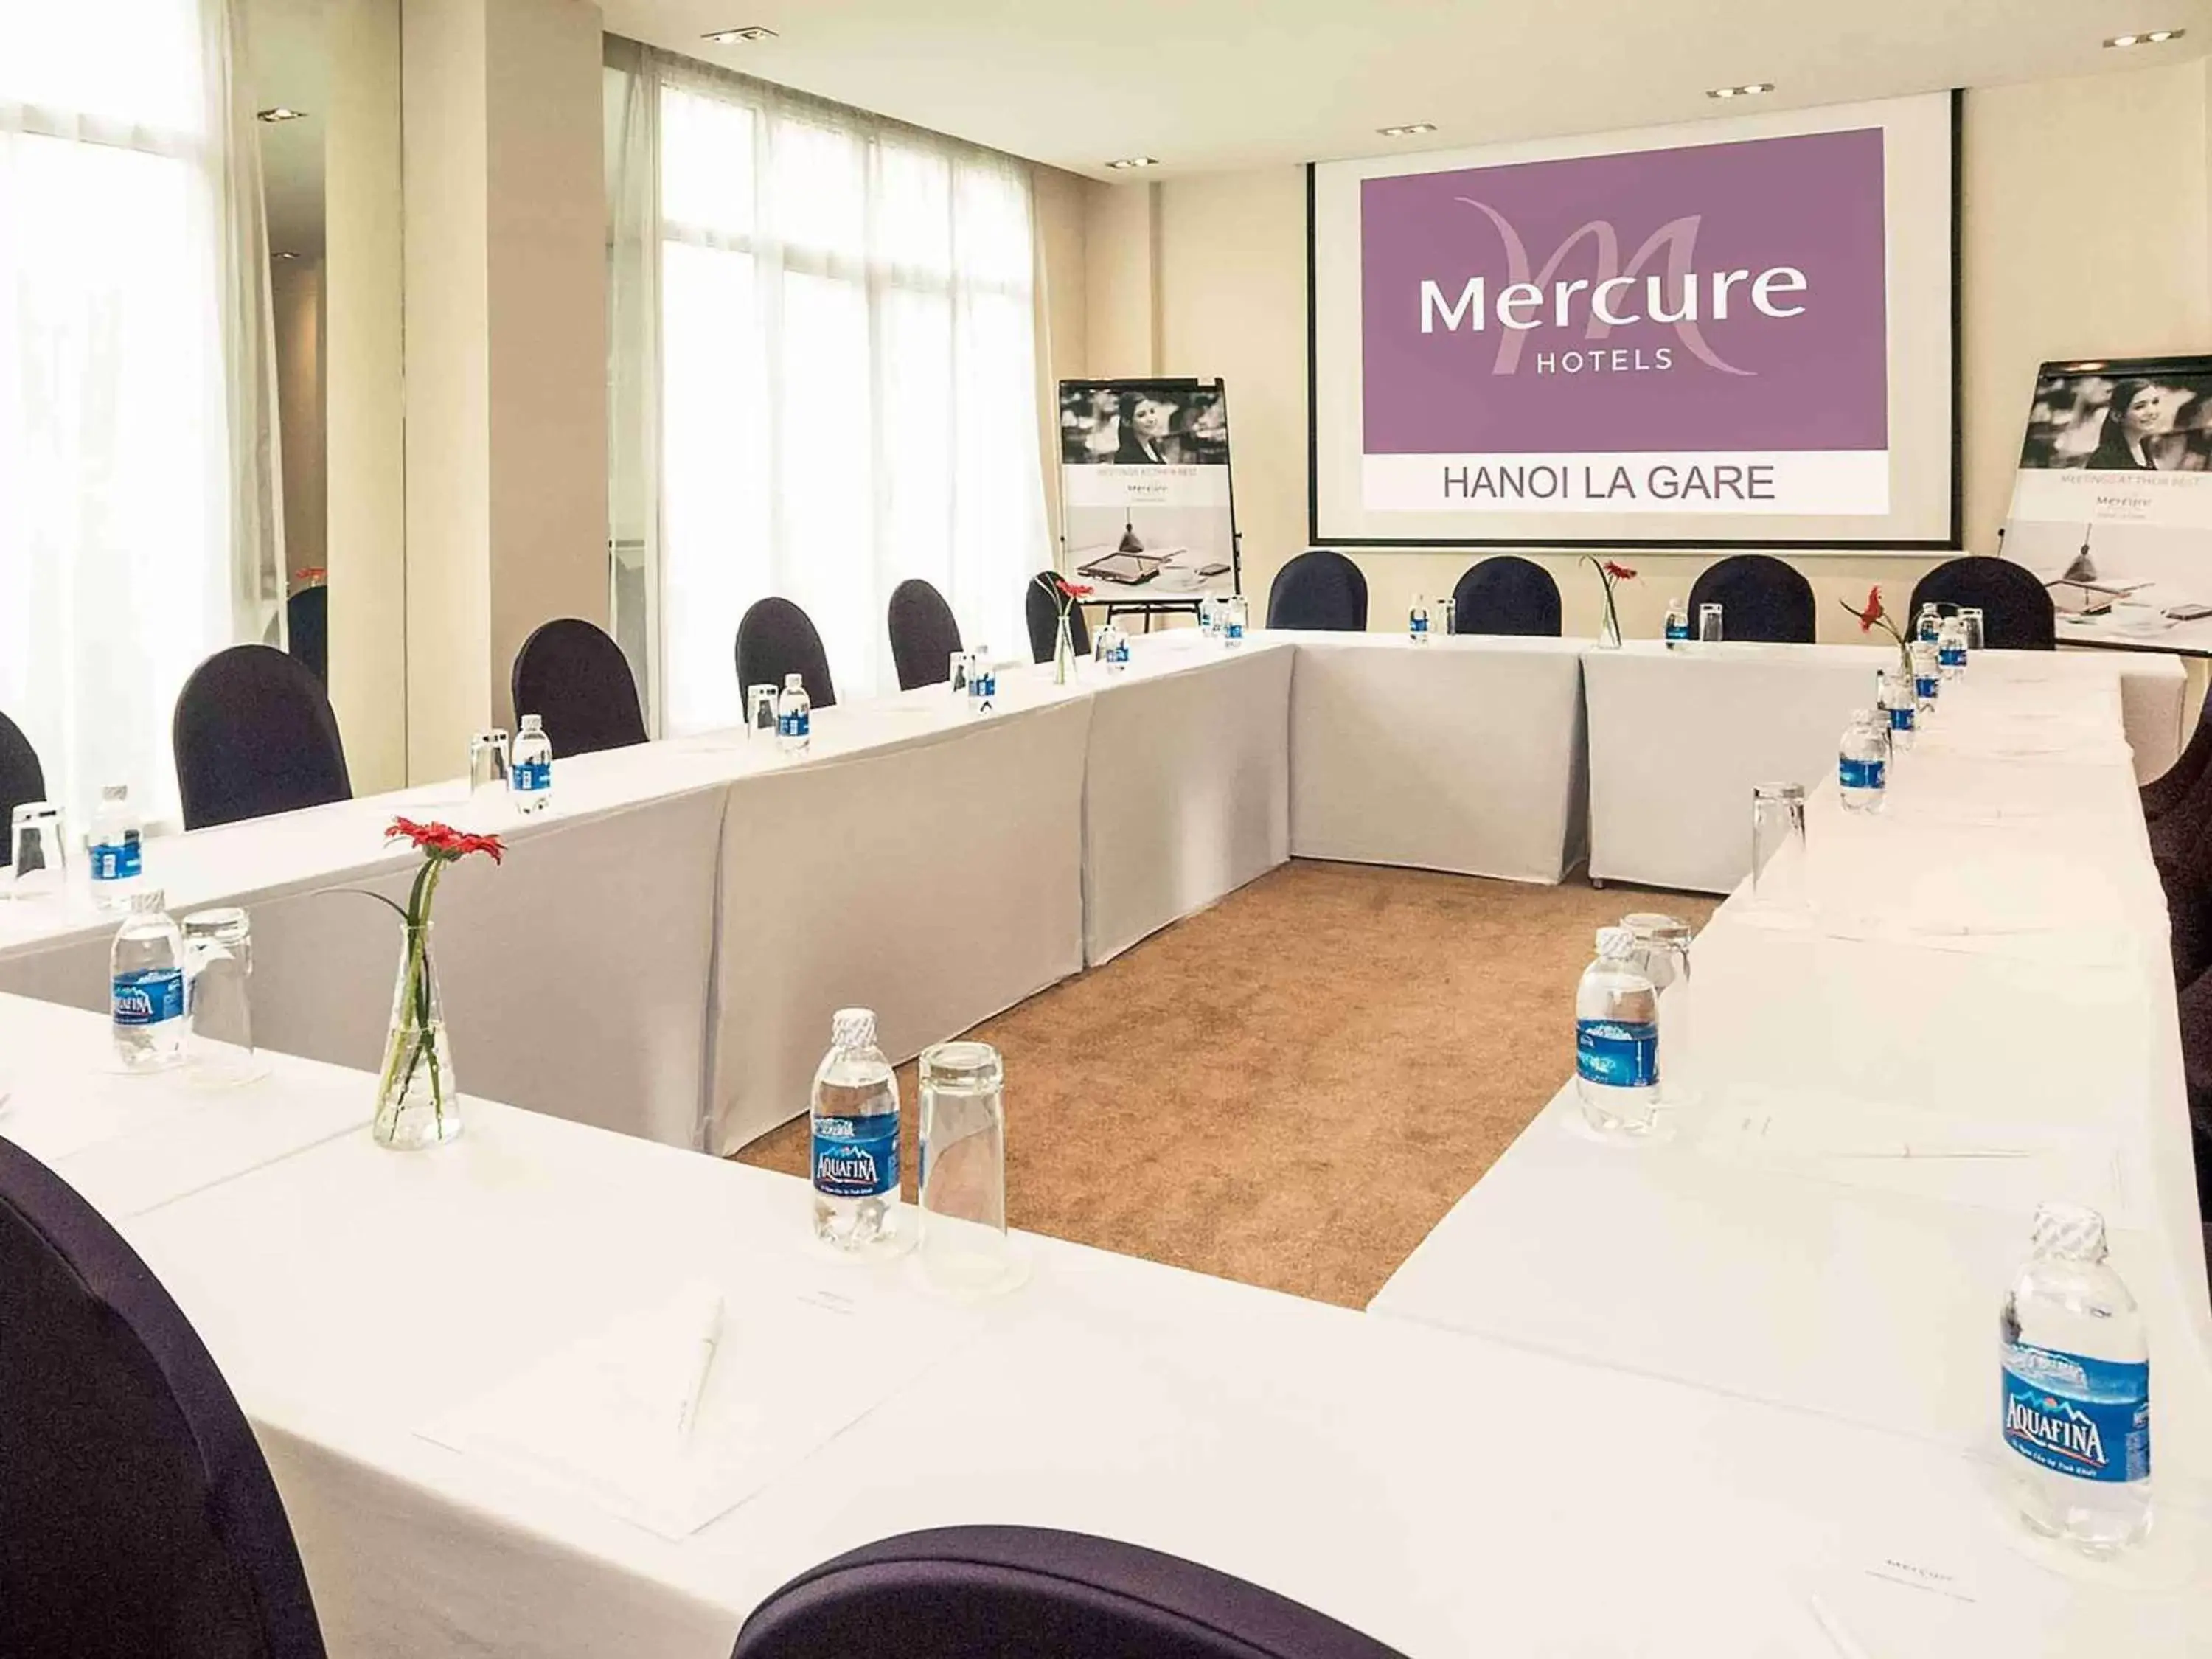 Meeting/conference room in Mercure Hanoi La Gare Hotel